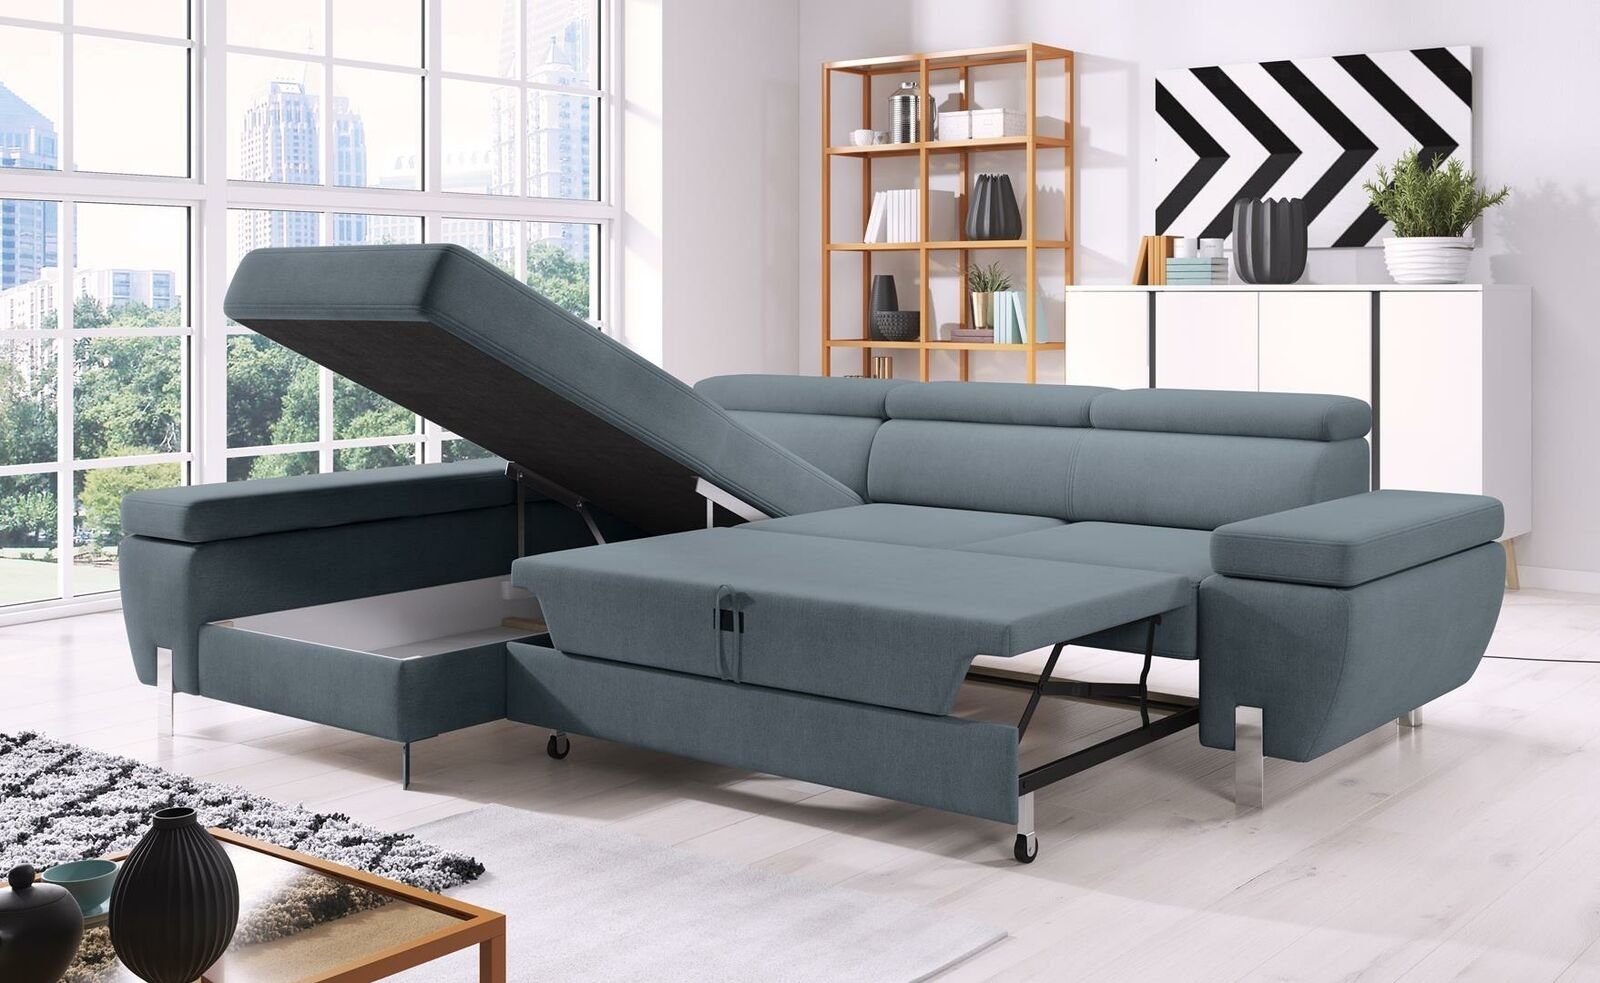 JVmoebel Ecksofa Schlafsofa Design Ecksofa L-form Bettfunktion Couch Textil Sofas, Mit Bettfunktion Dunkelgrau